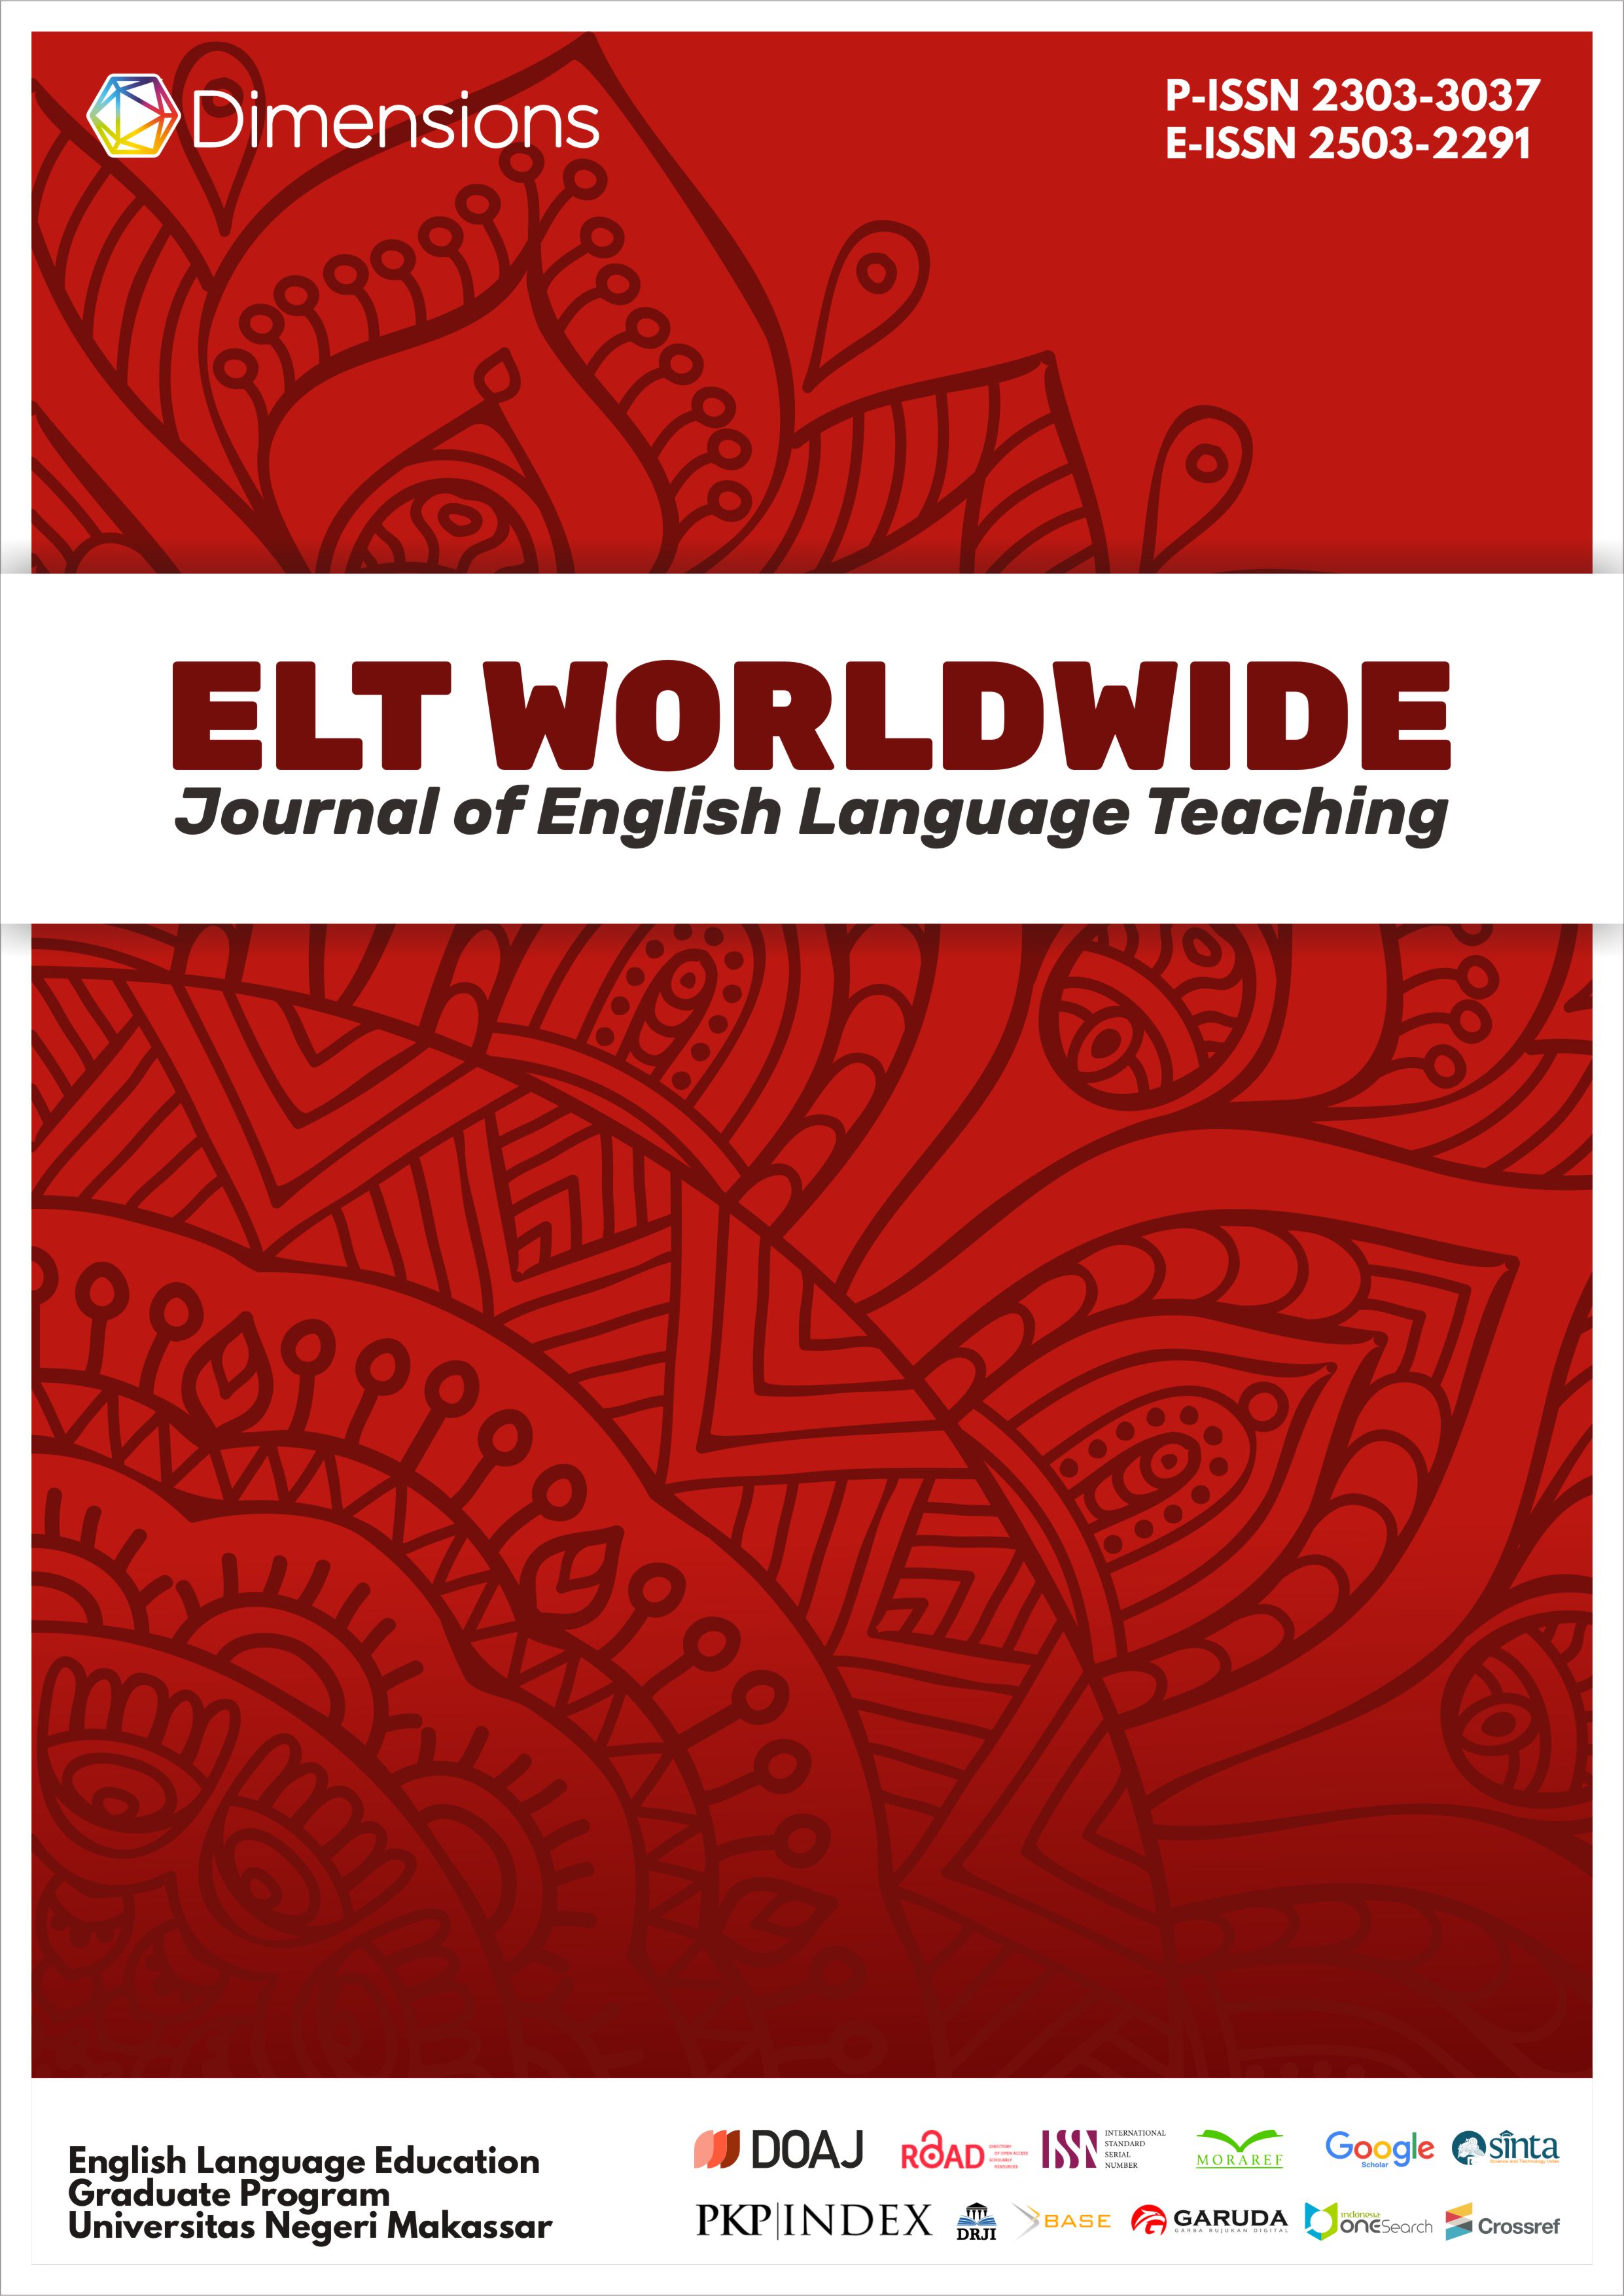 ELT WORLDWIDE: Journal of English Language Teaching